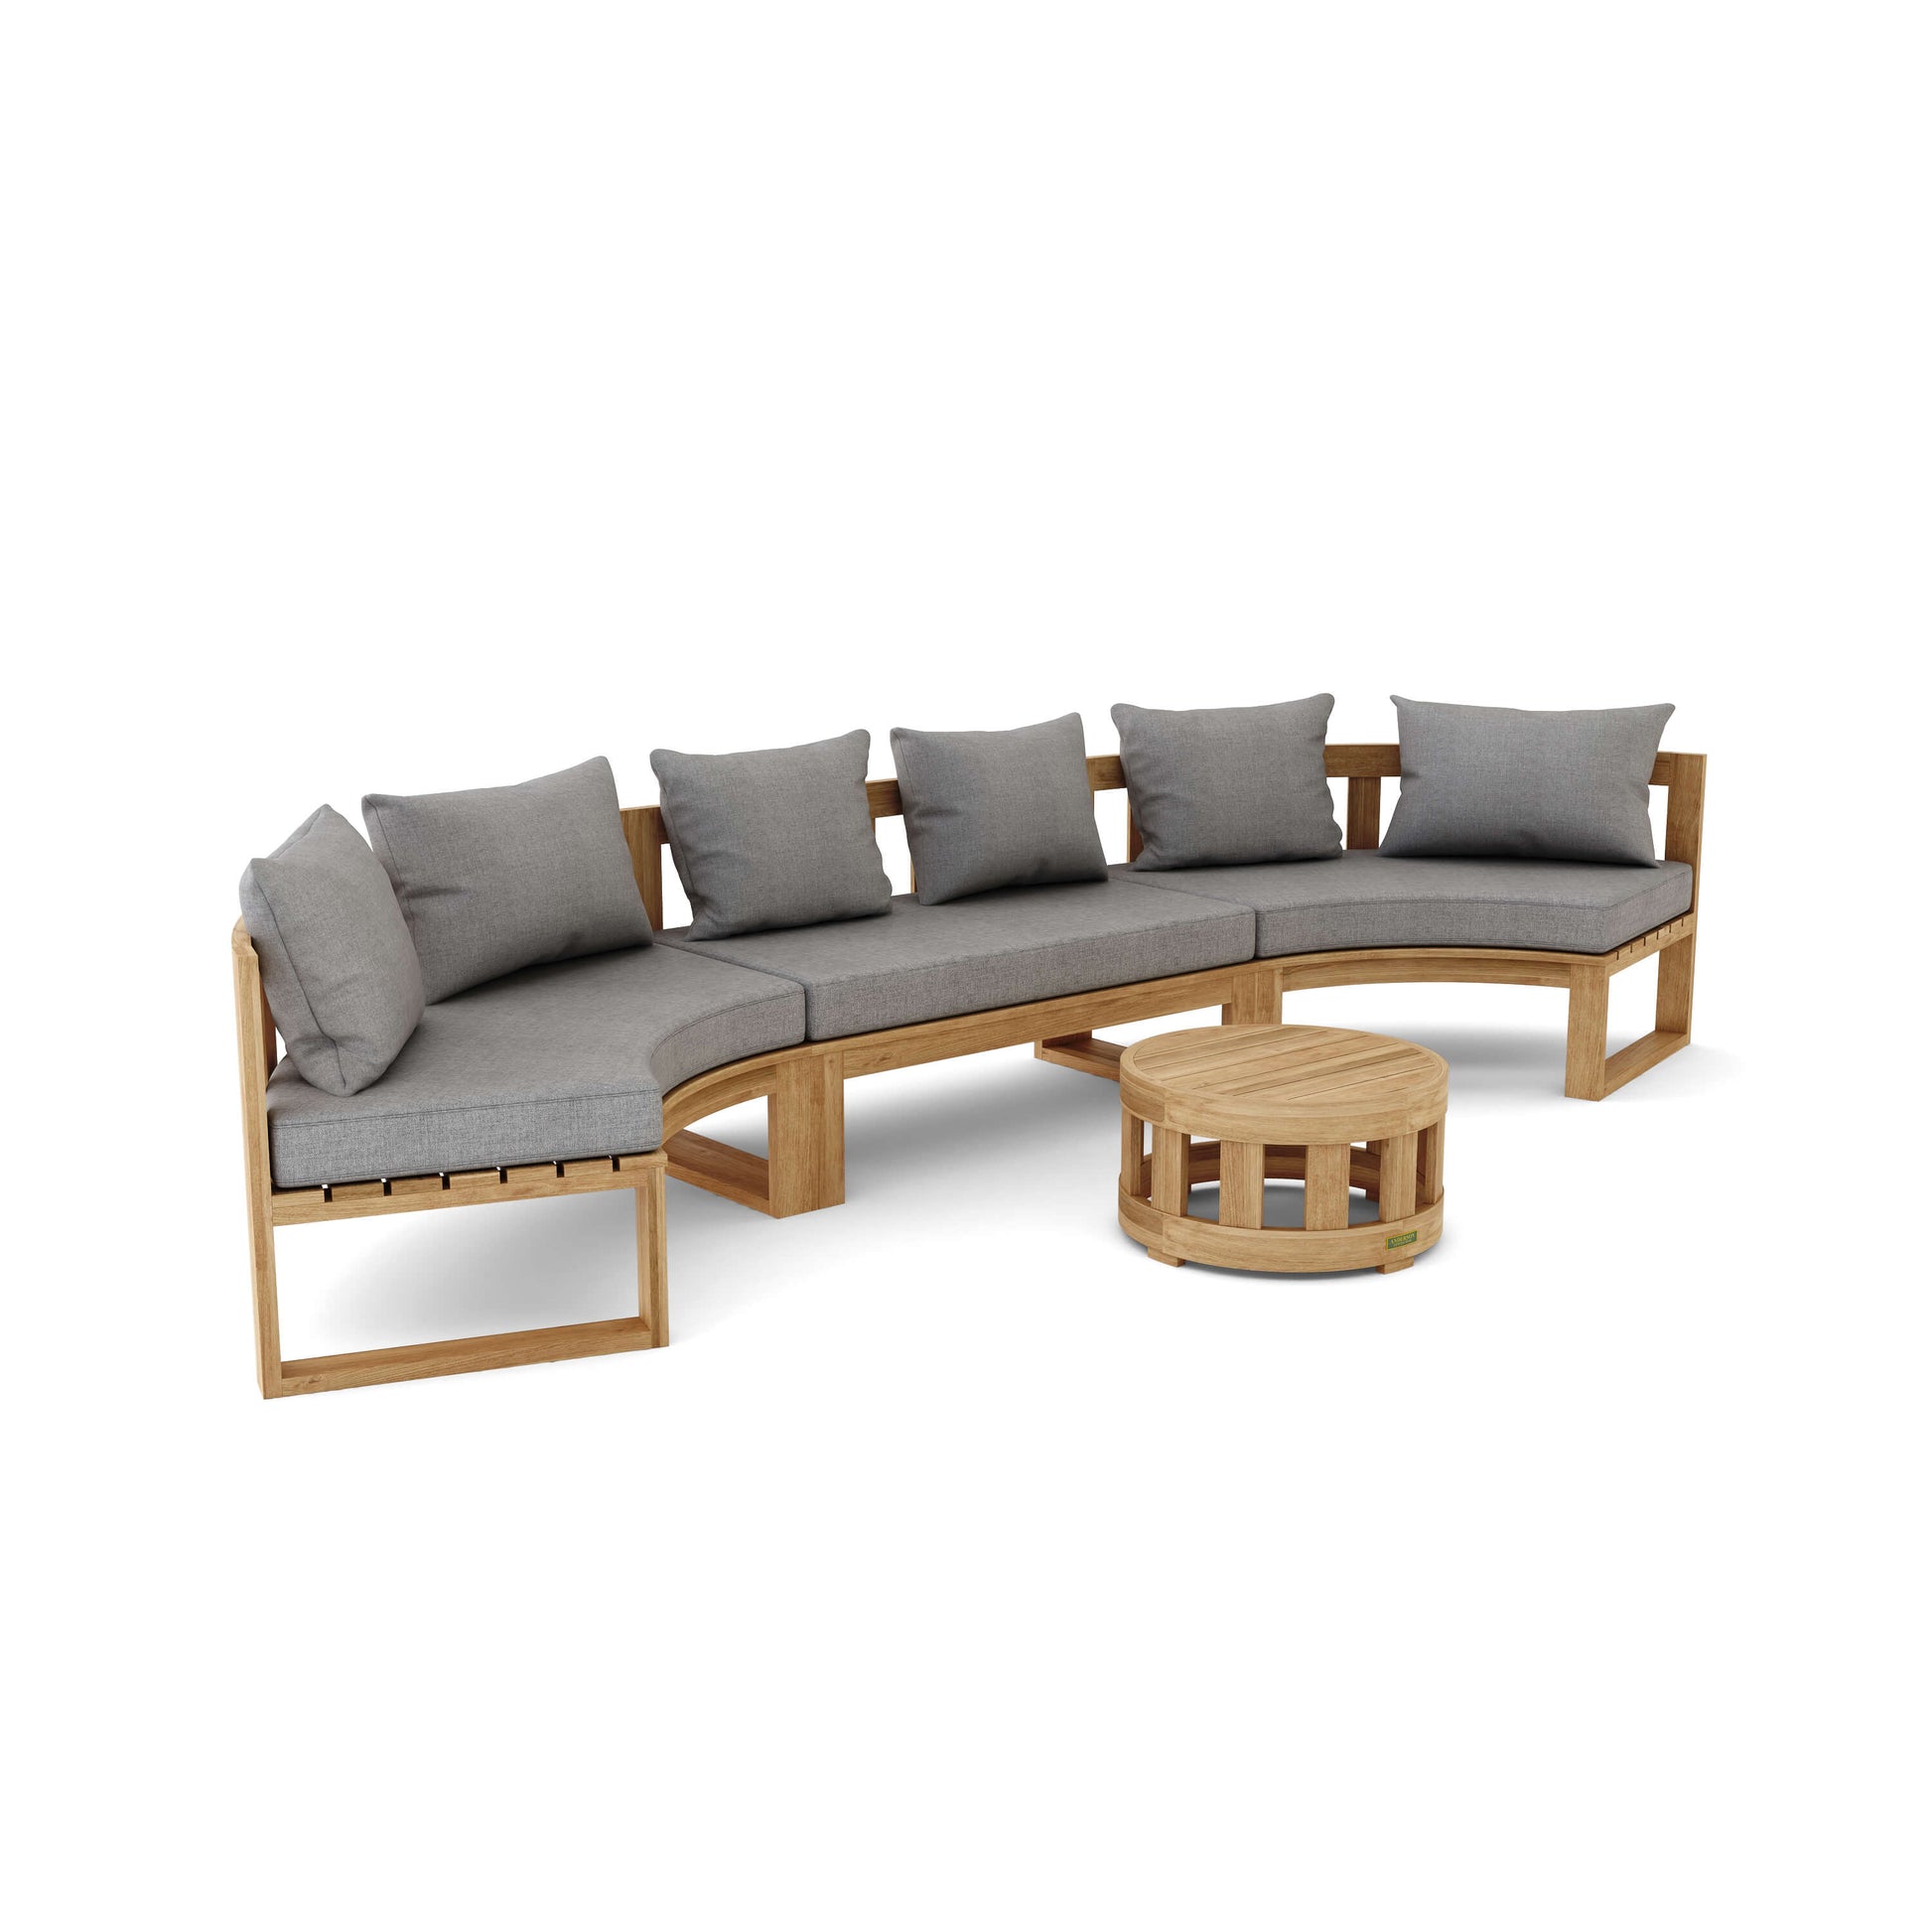 SET-814 Circular Modular Deep Seating, Straight Side Table & Coffee Table Outdoor Furniture Set Anderson   